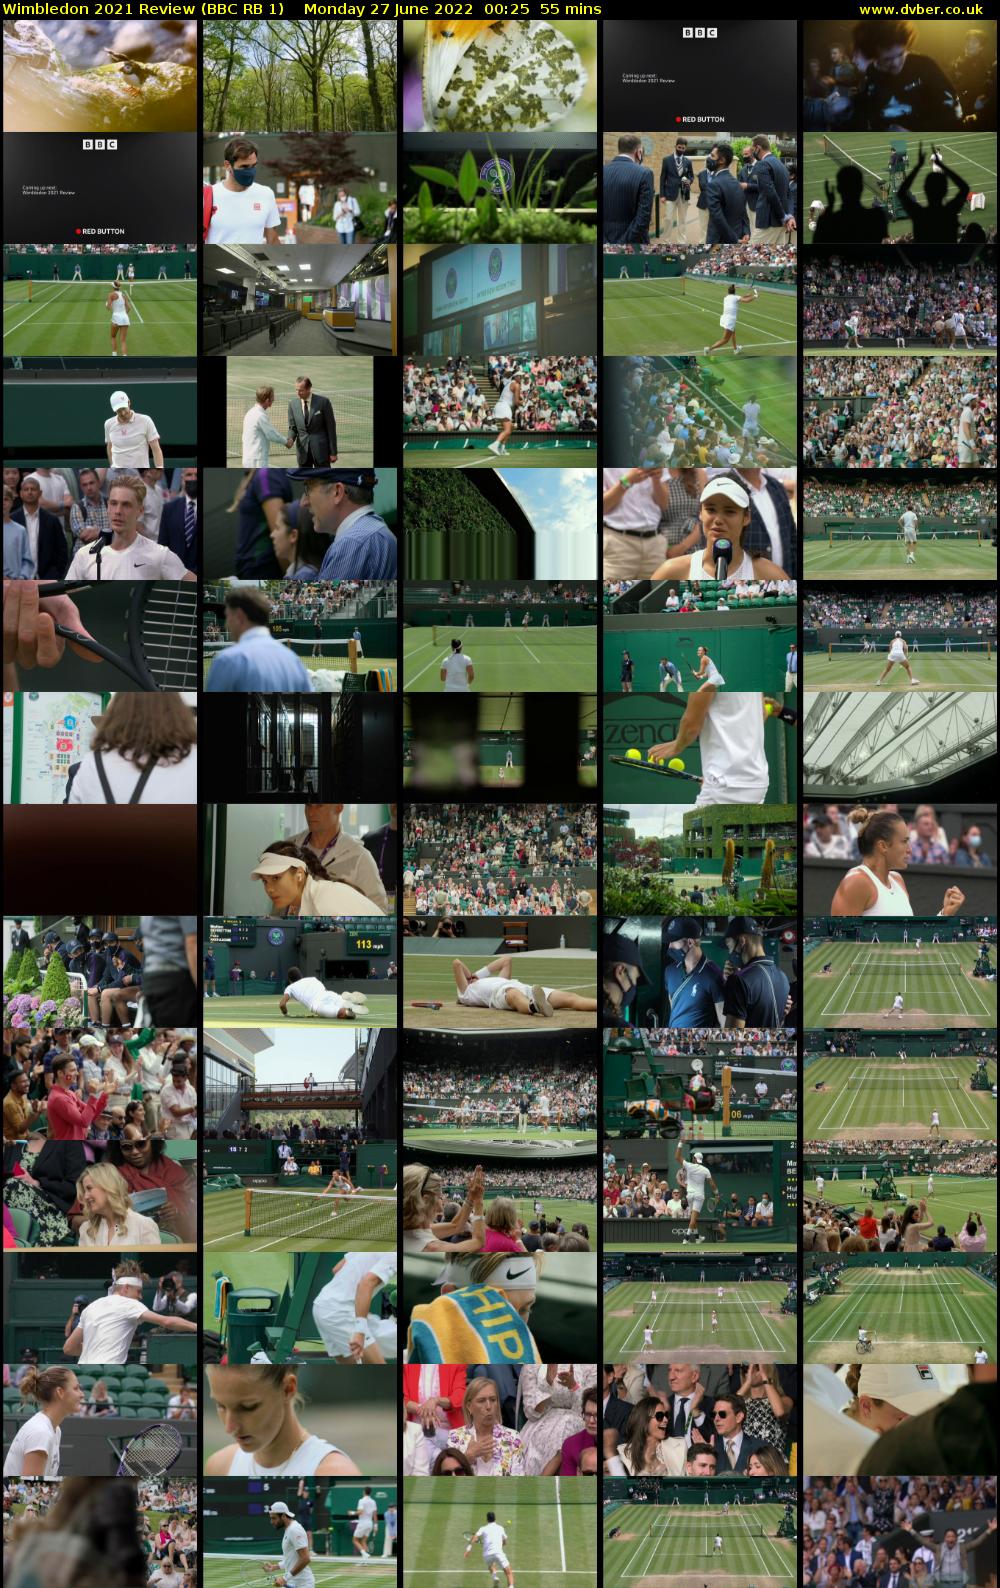 Wimbledon 2021 Review (BBC RB 1) Monday 27 June 2022 00:25 - 01:20